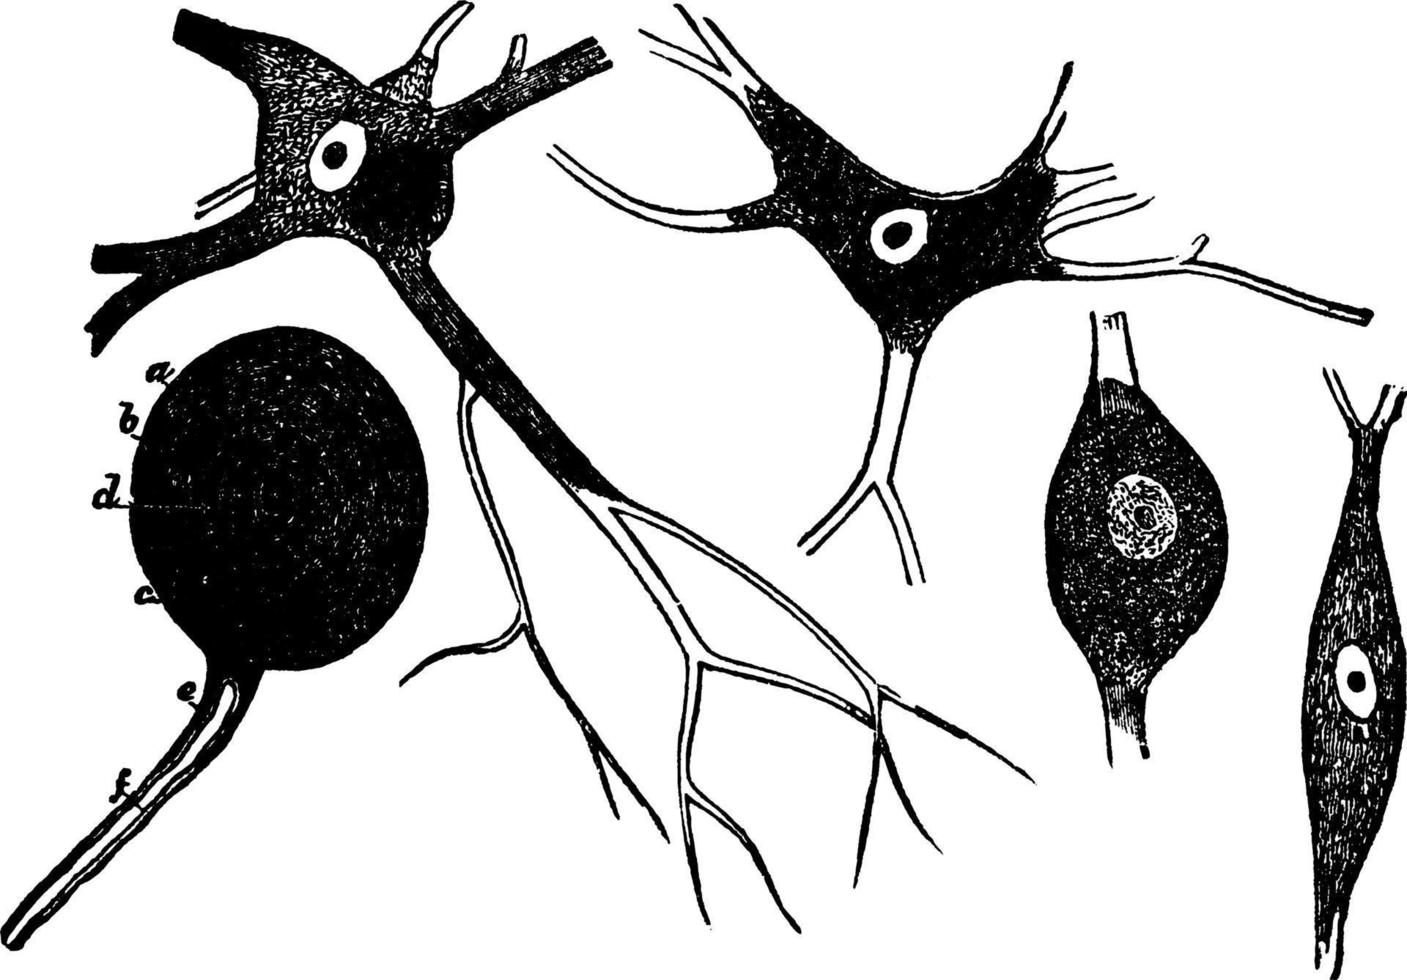 neurônios, ilustração vintage. vetor